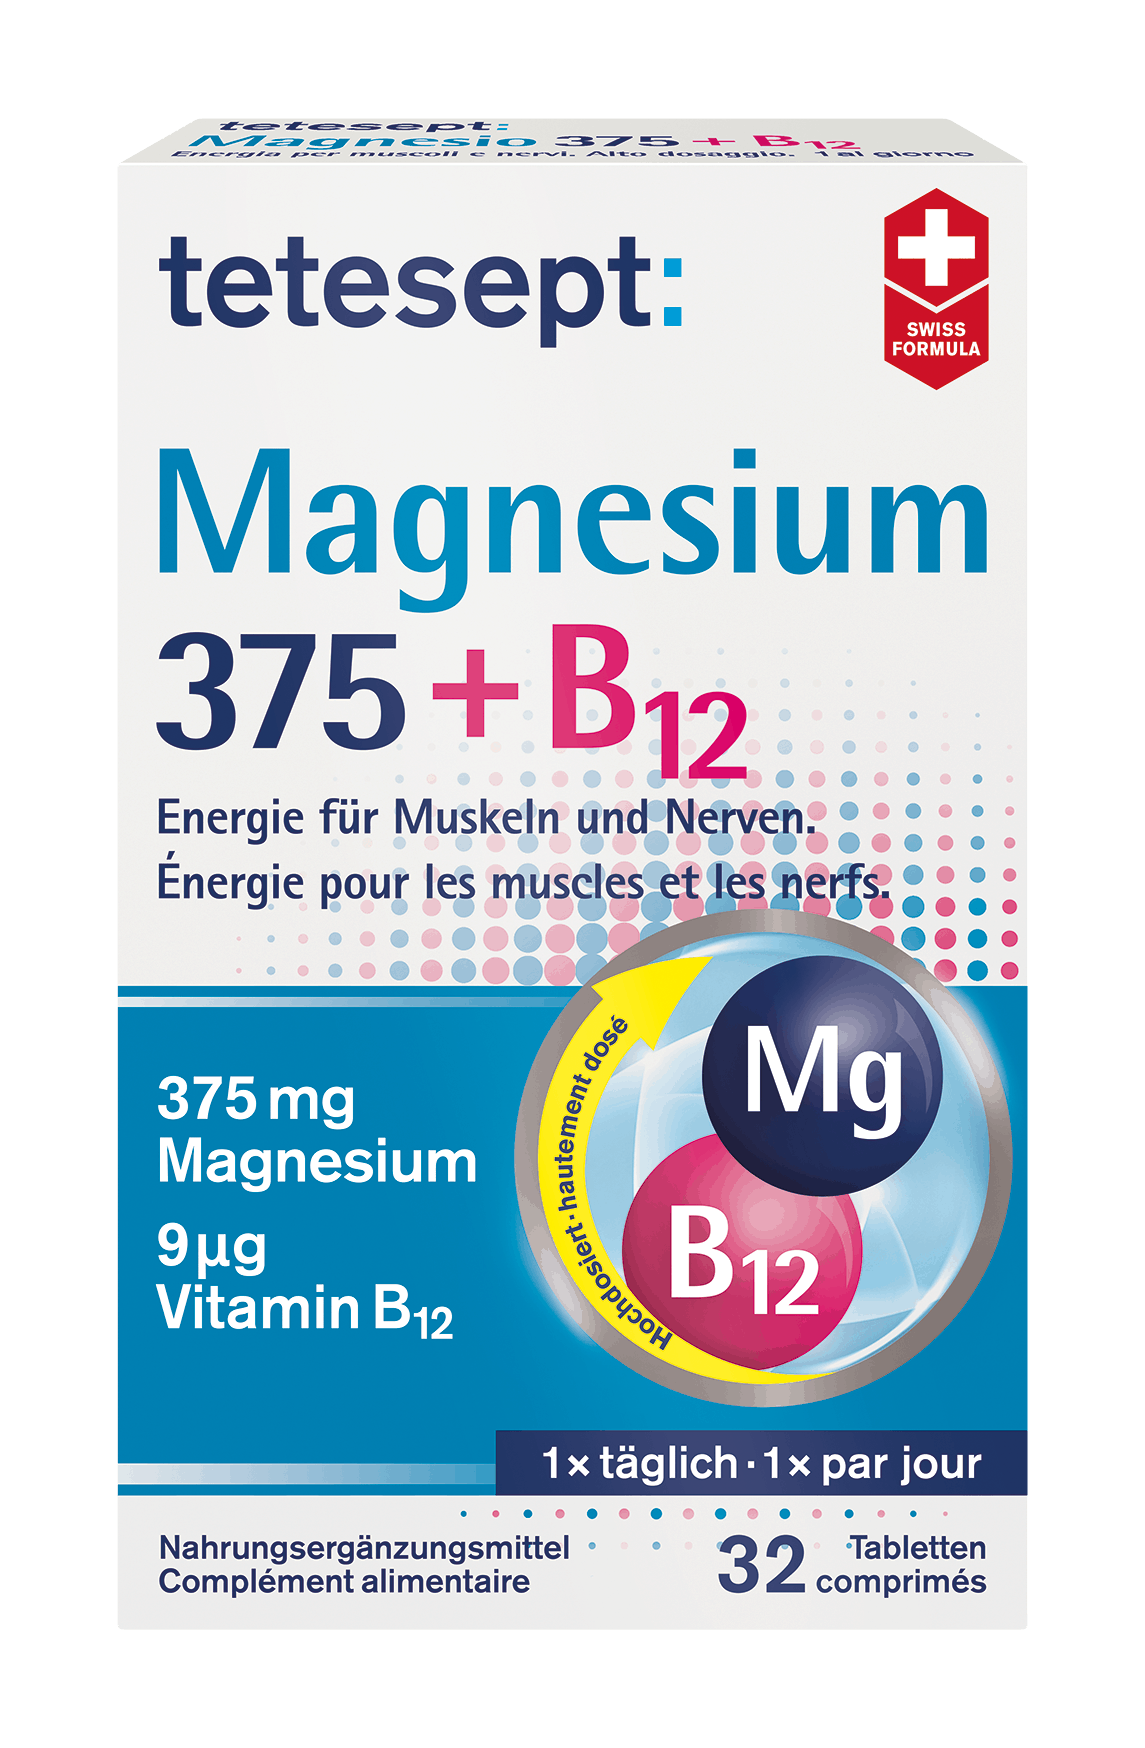 tetesept Magnesium 375 + B12 Tabletten